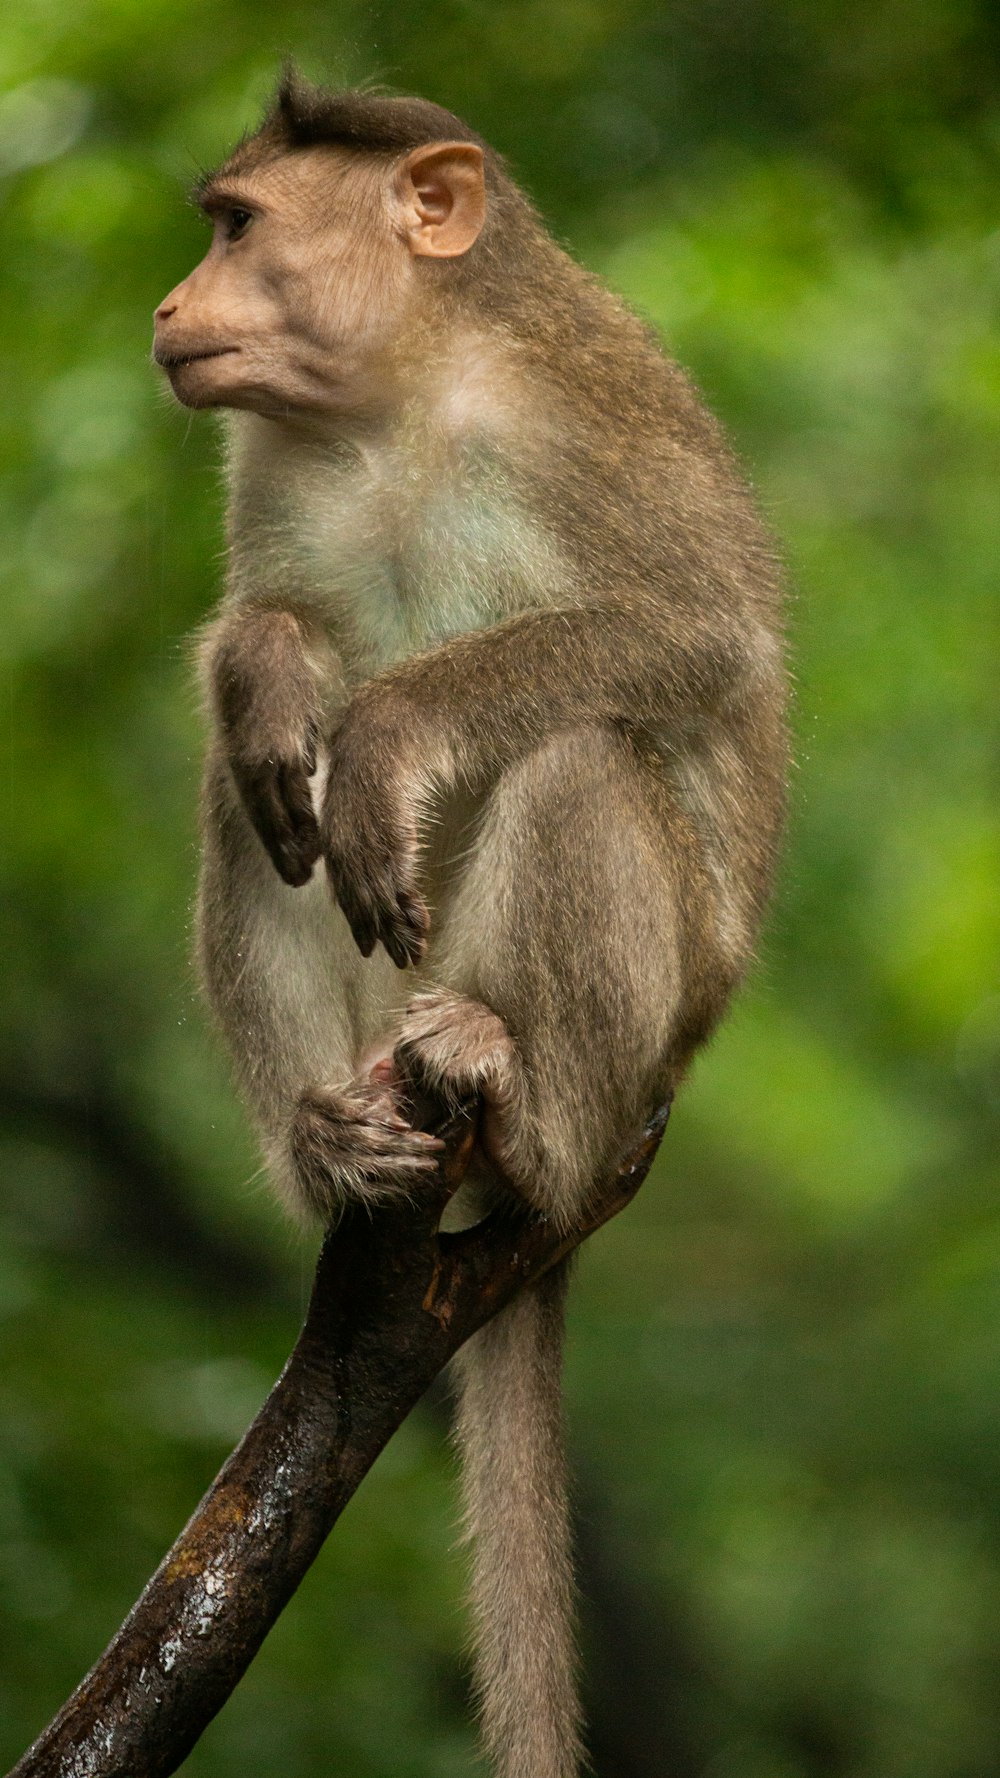 a monkey sitting on a branch